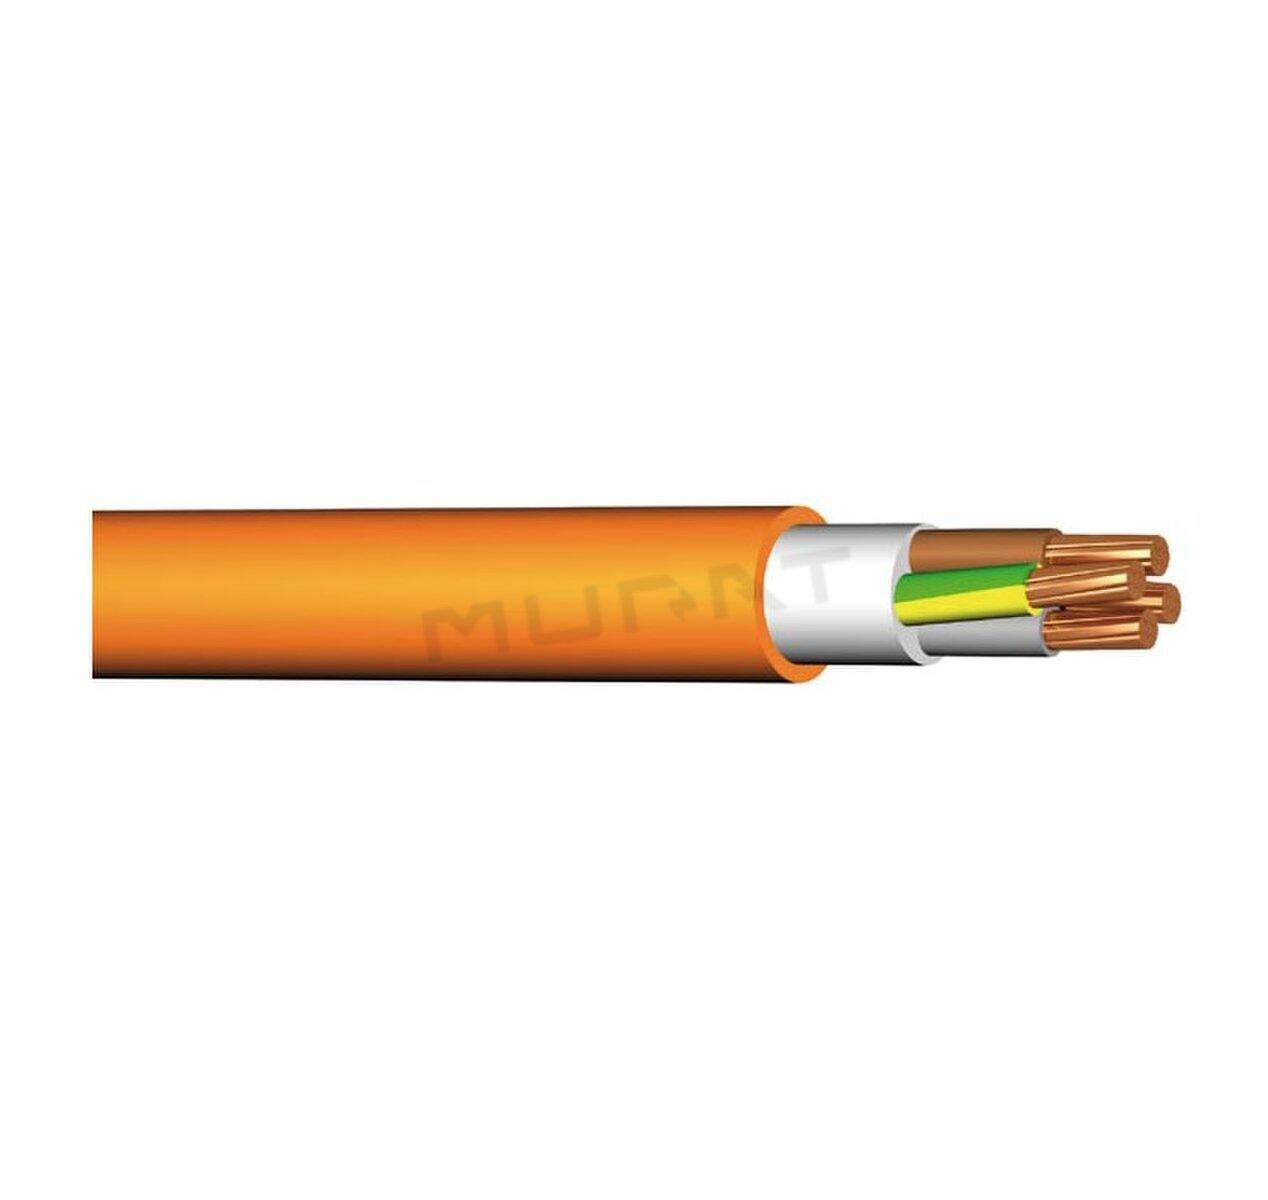 Kábel PRAFlaSafe X-J 1x240 mm2 RM B2ca s1d1a1